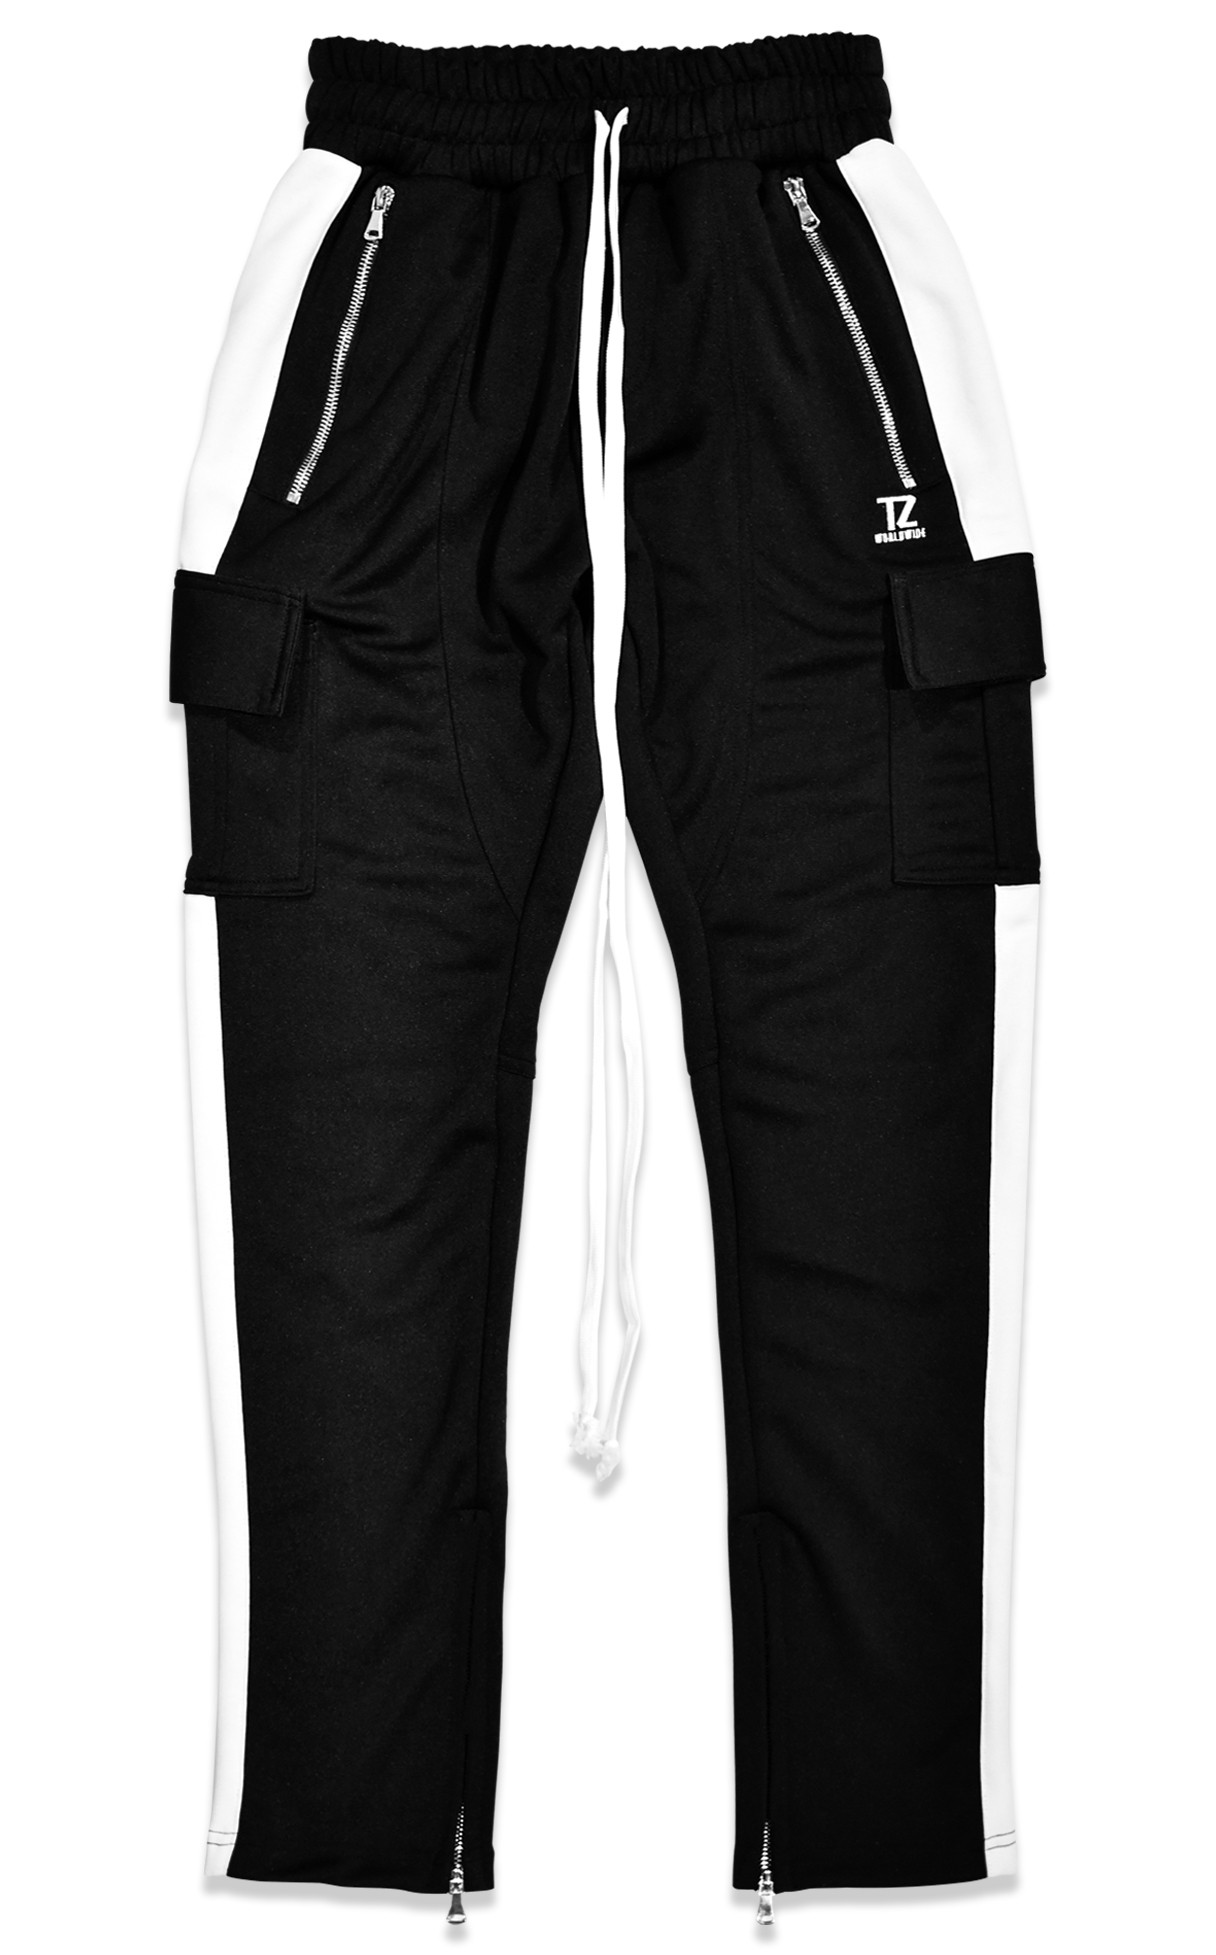 TZ Multiple Packet Track Pants (Black/White) Size M